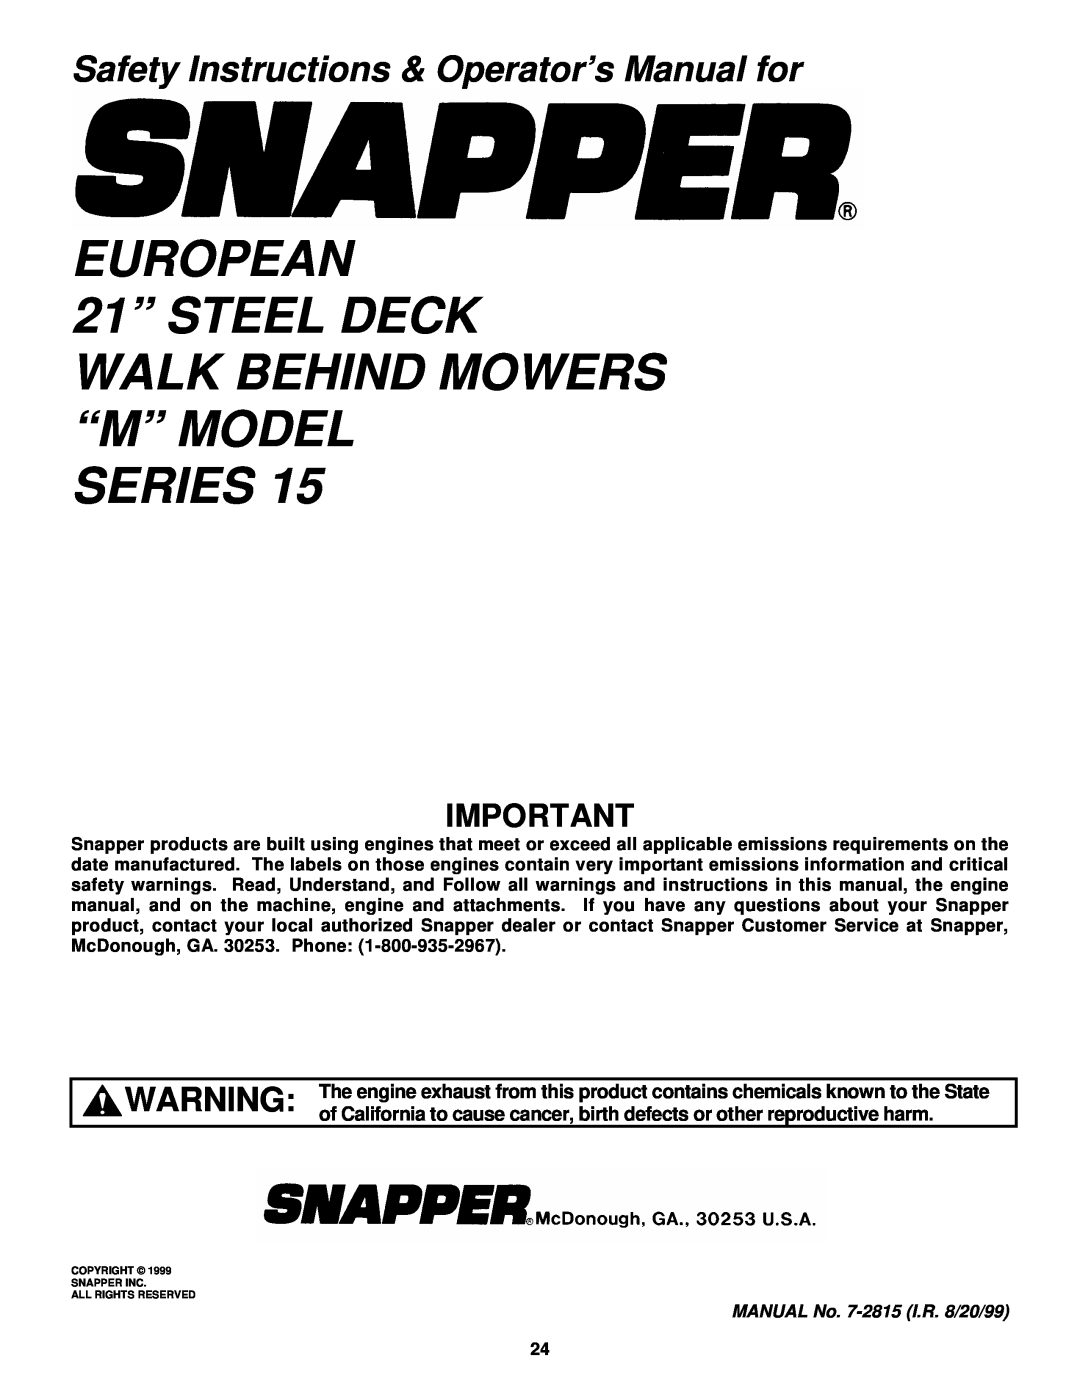 Snapper EMRP216015B important safety instructions EUROPEAN 21” STEEL DECK, Walk Behind Mowers “M” Model Series 